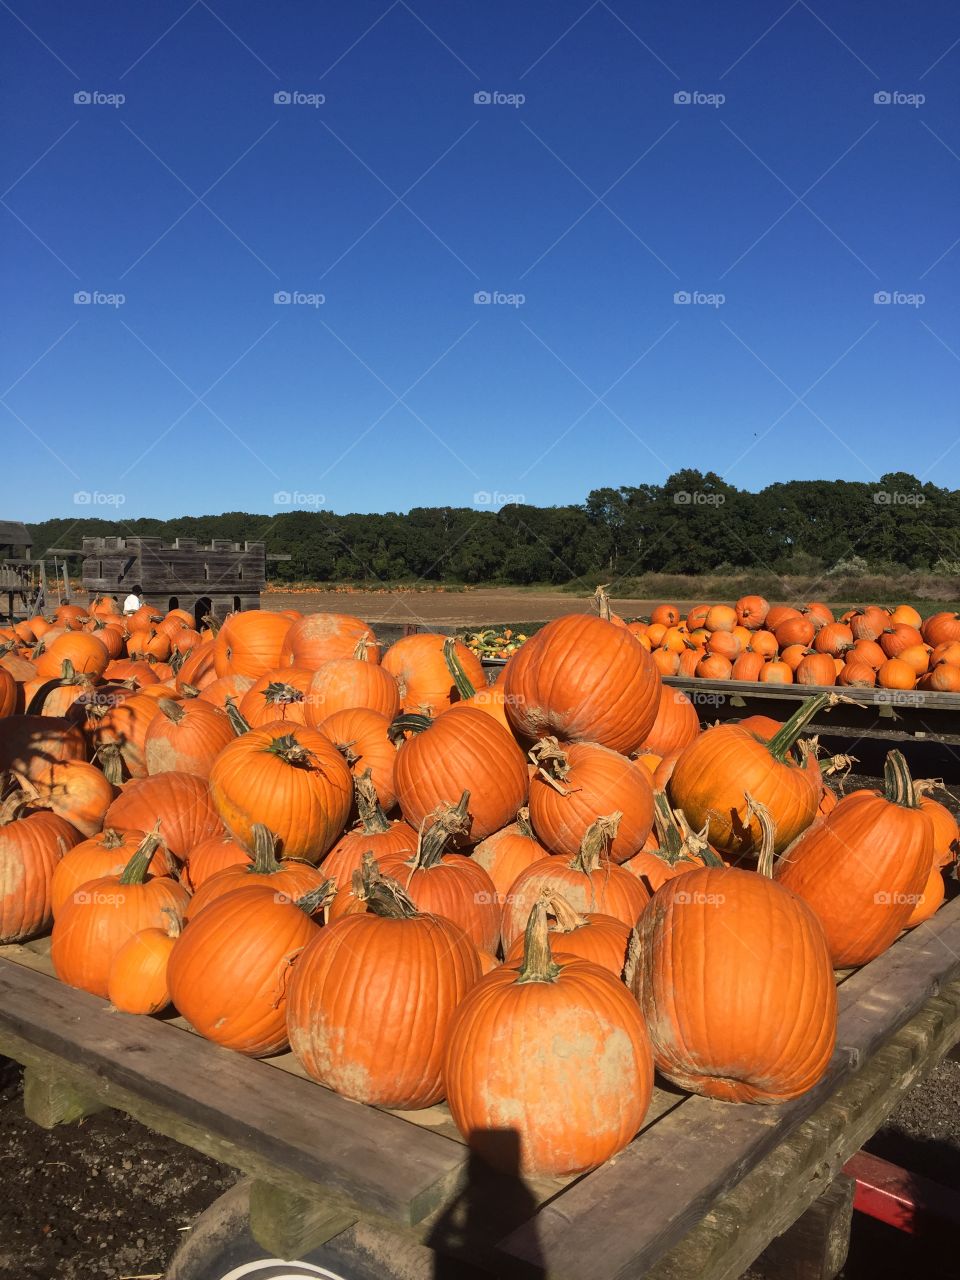 Harvested pumpkins in field